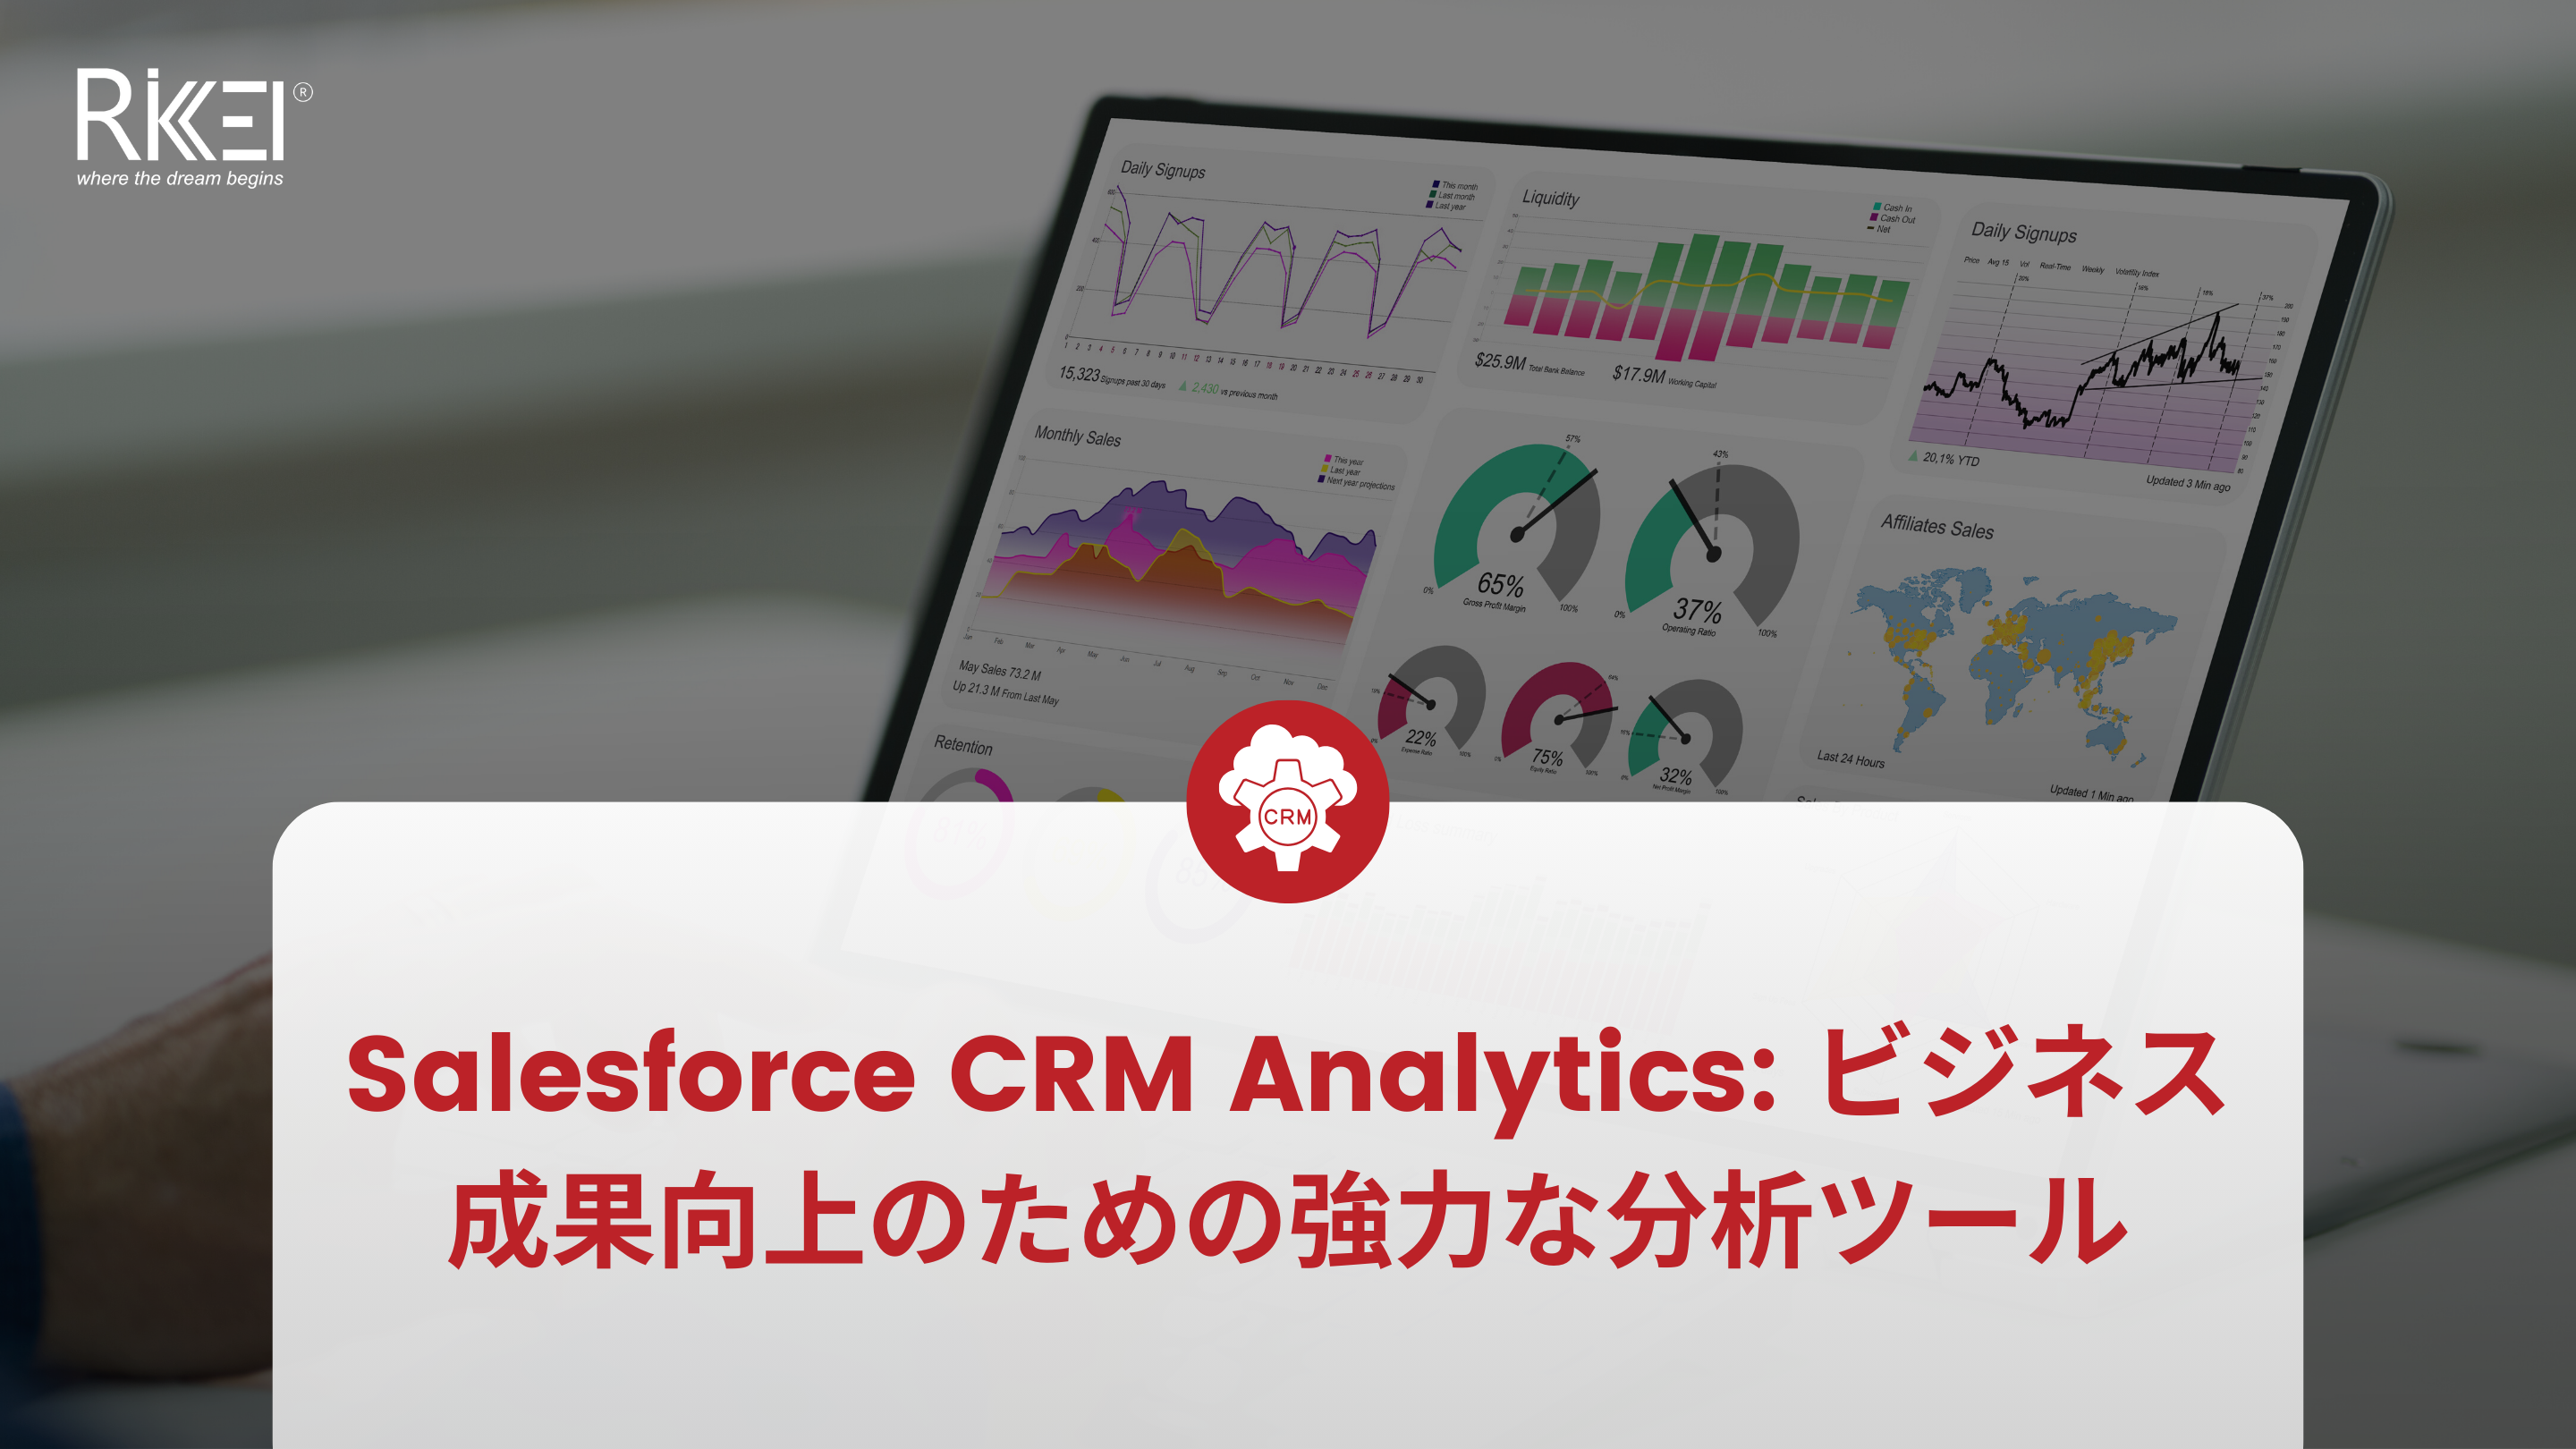 Salesforce CRM Analytics: ビジネス成果向上のための強力な分析ツール